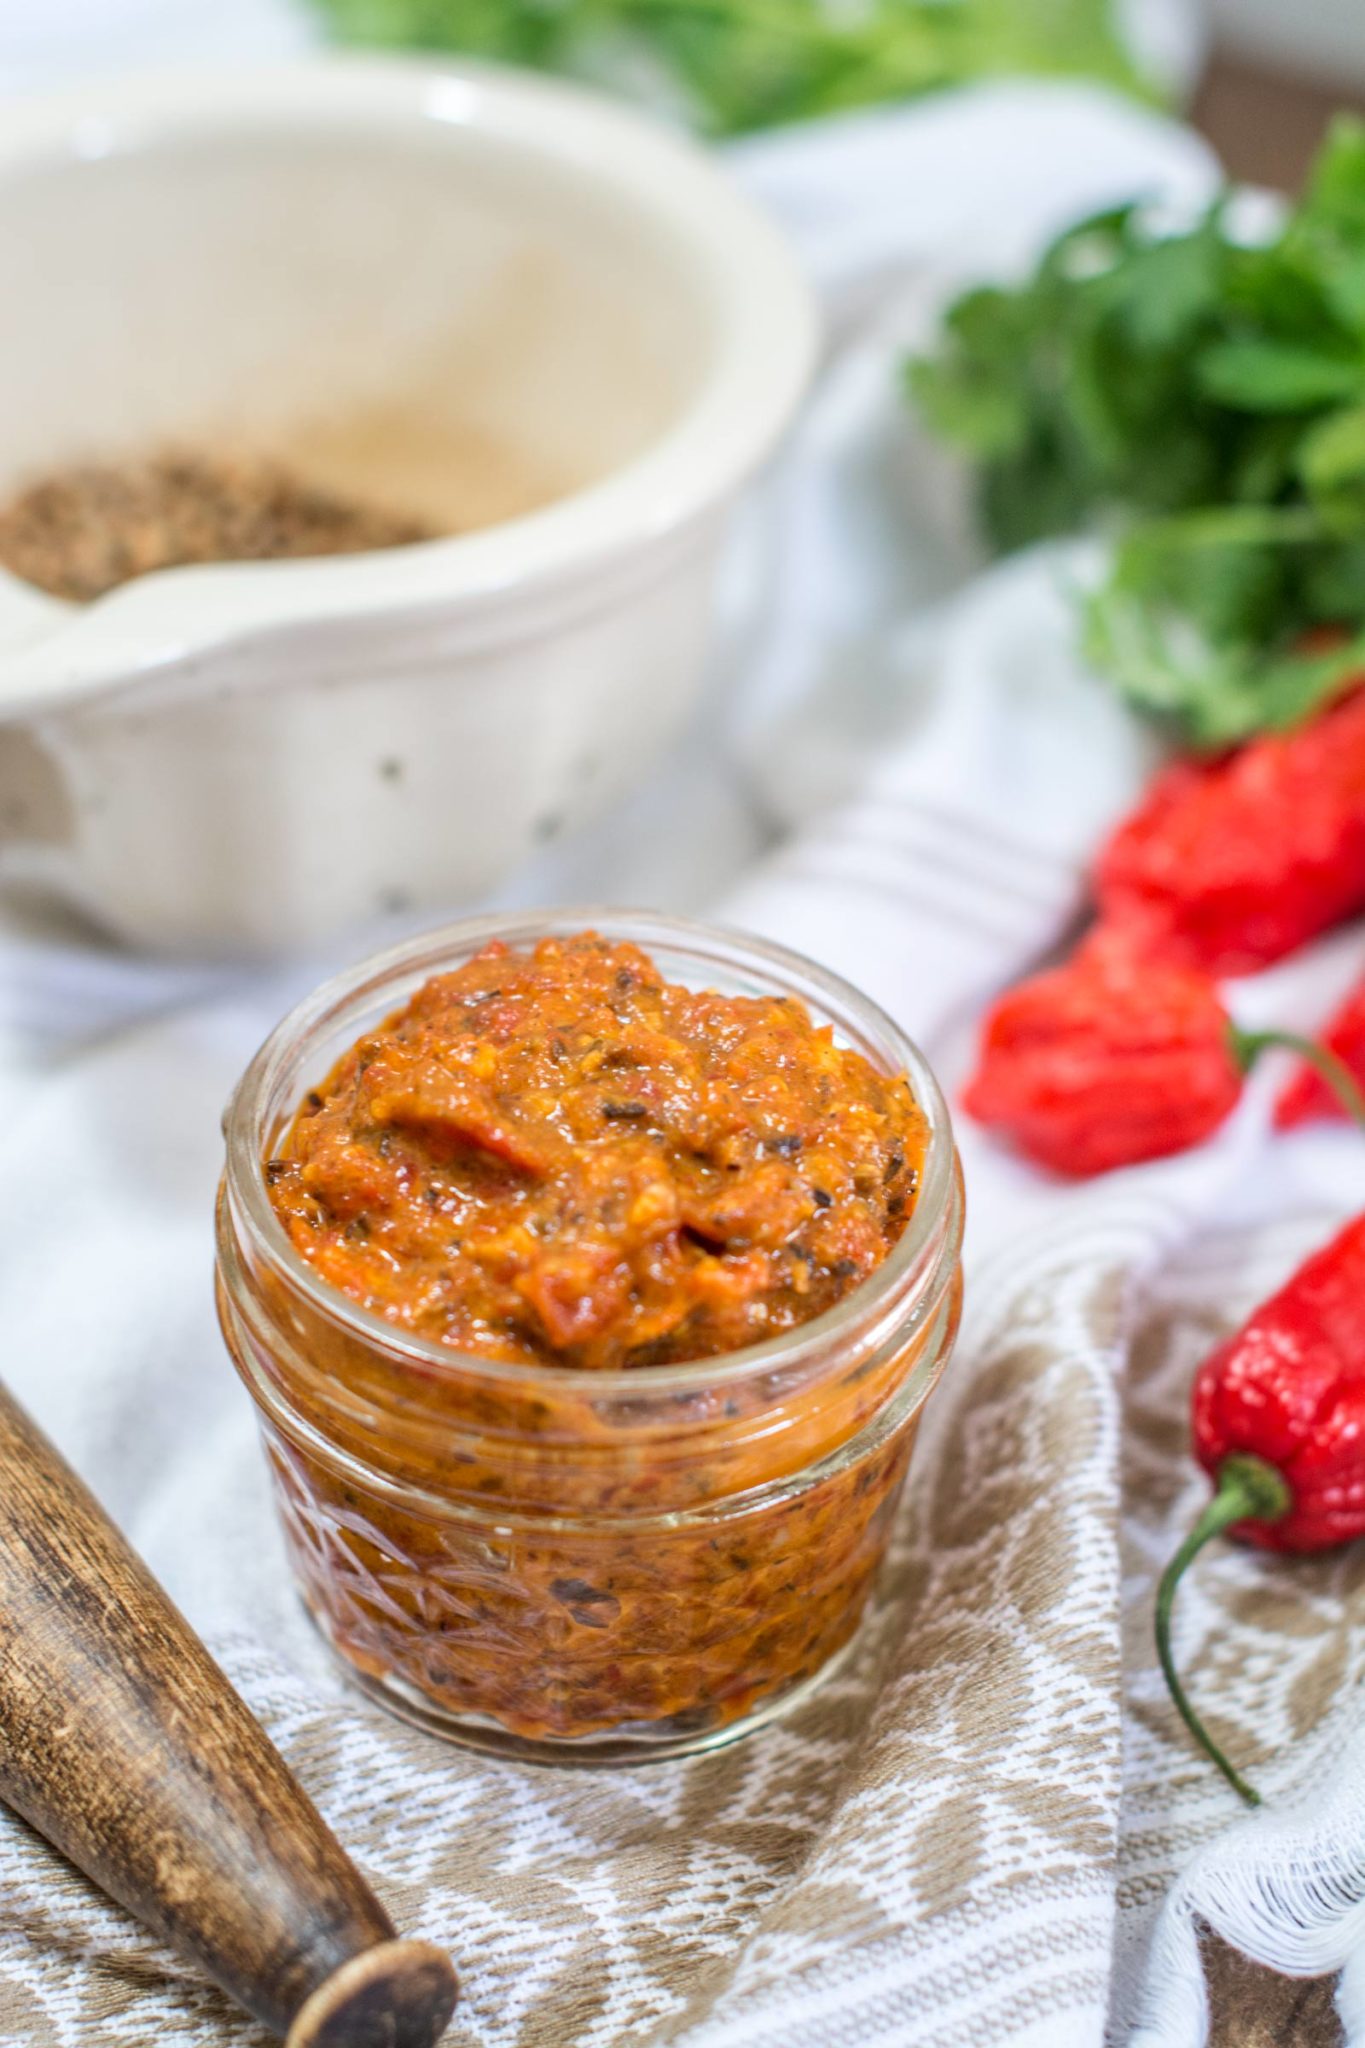 Harissa in jar with chili